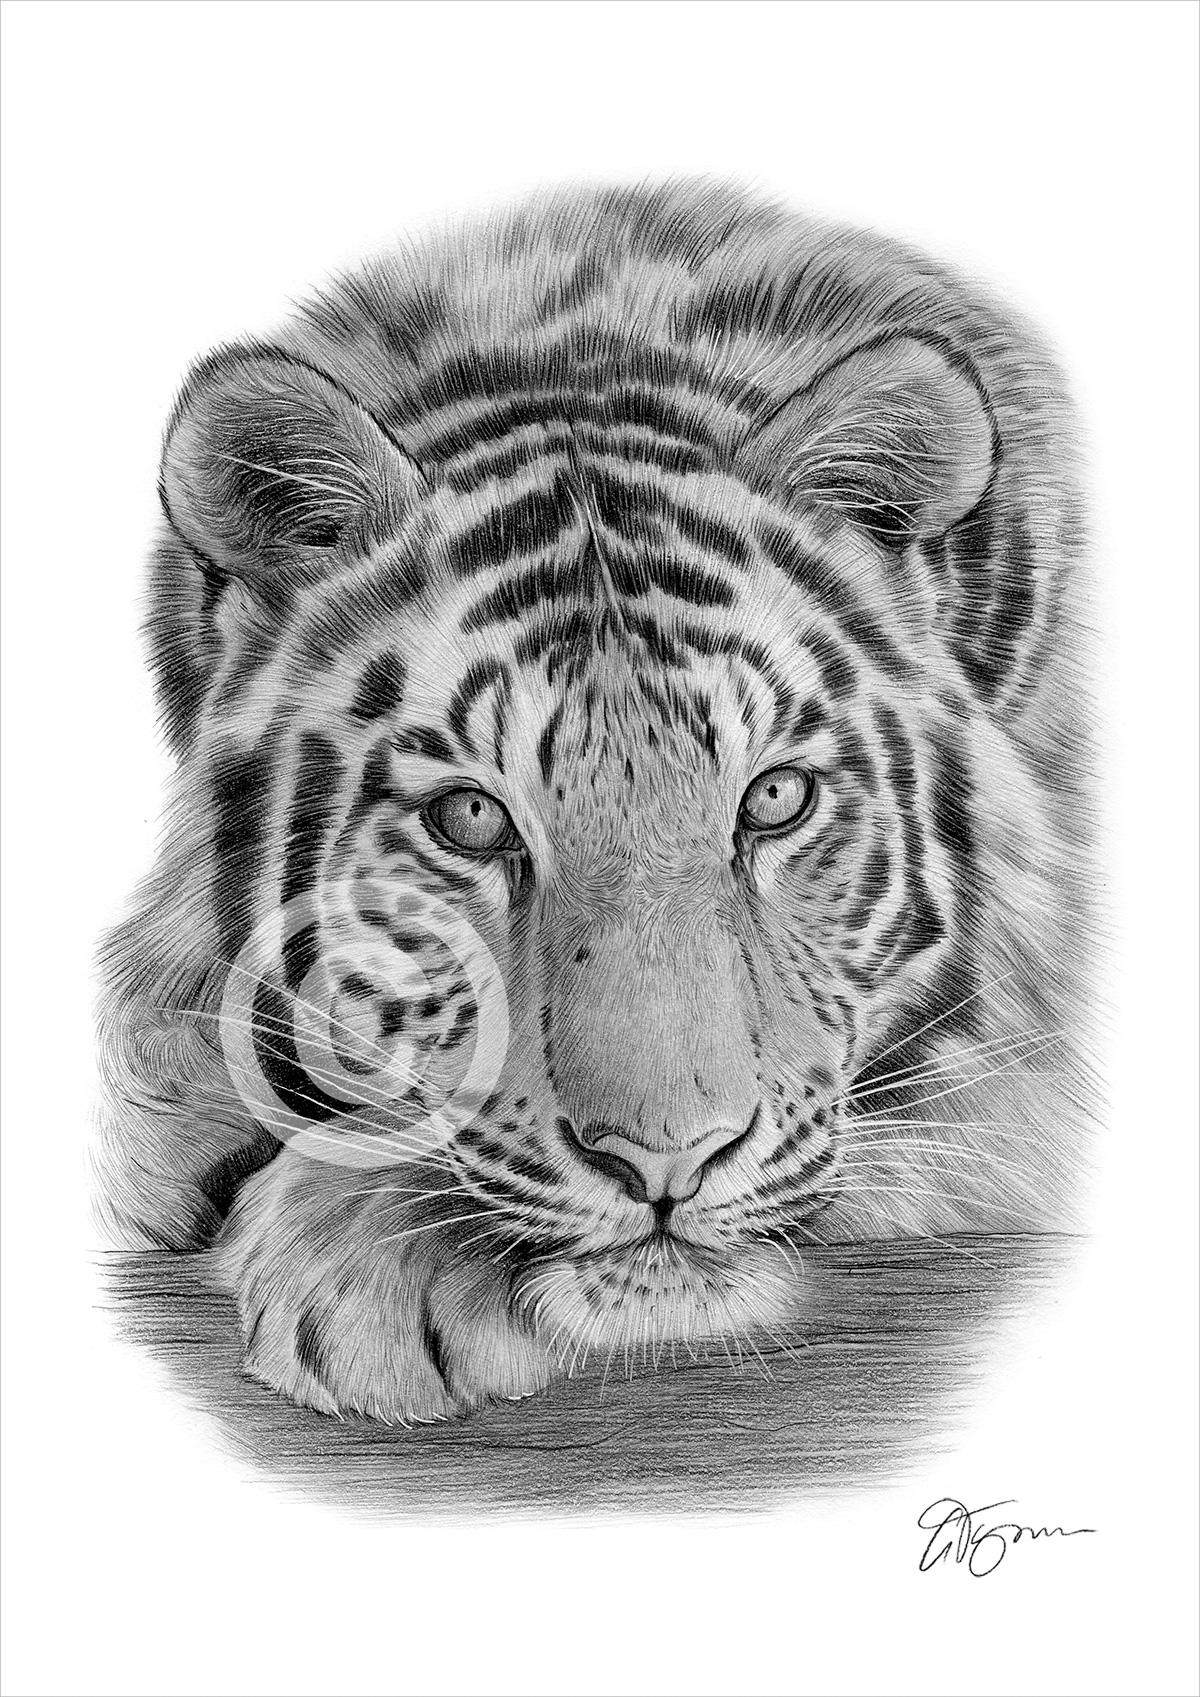 Pencil drawing of a Sumatran tiger by artist Gary Tymon